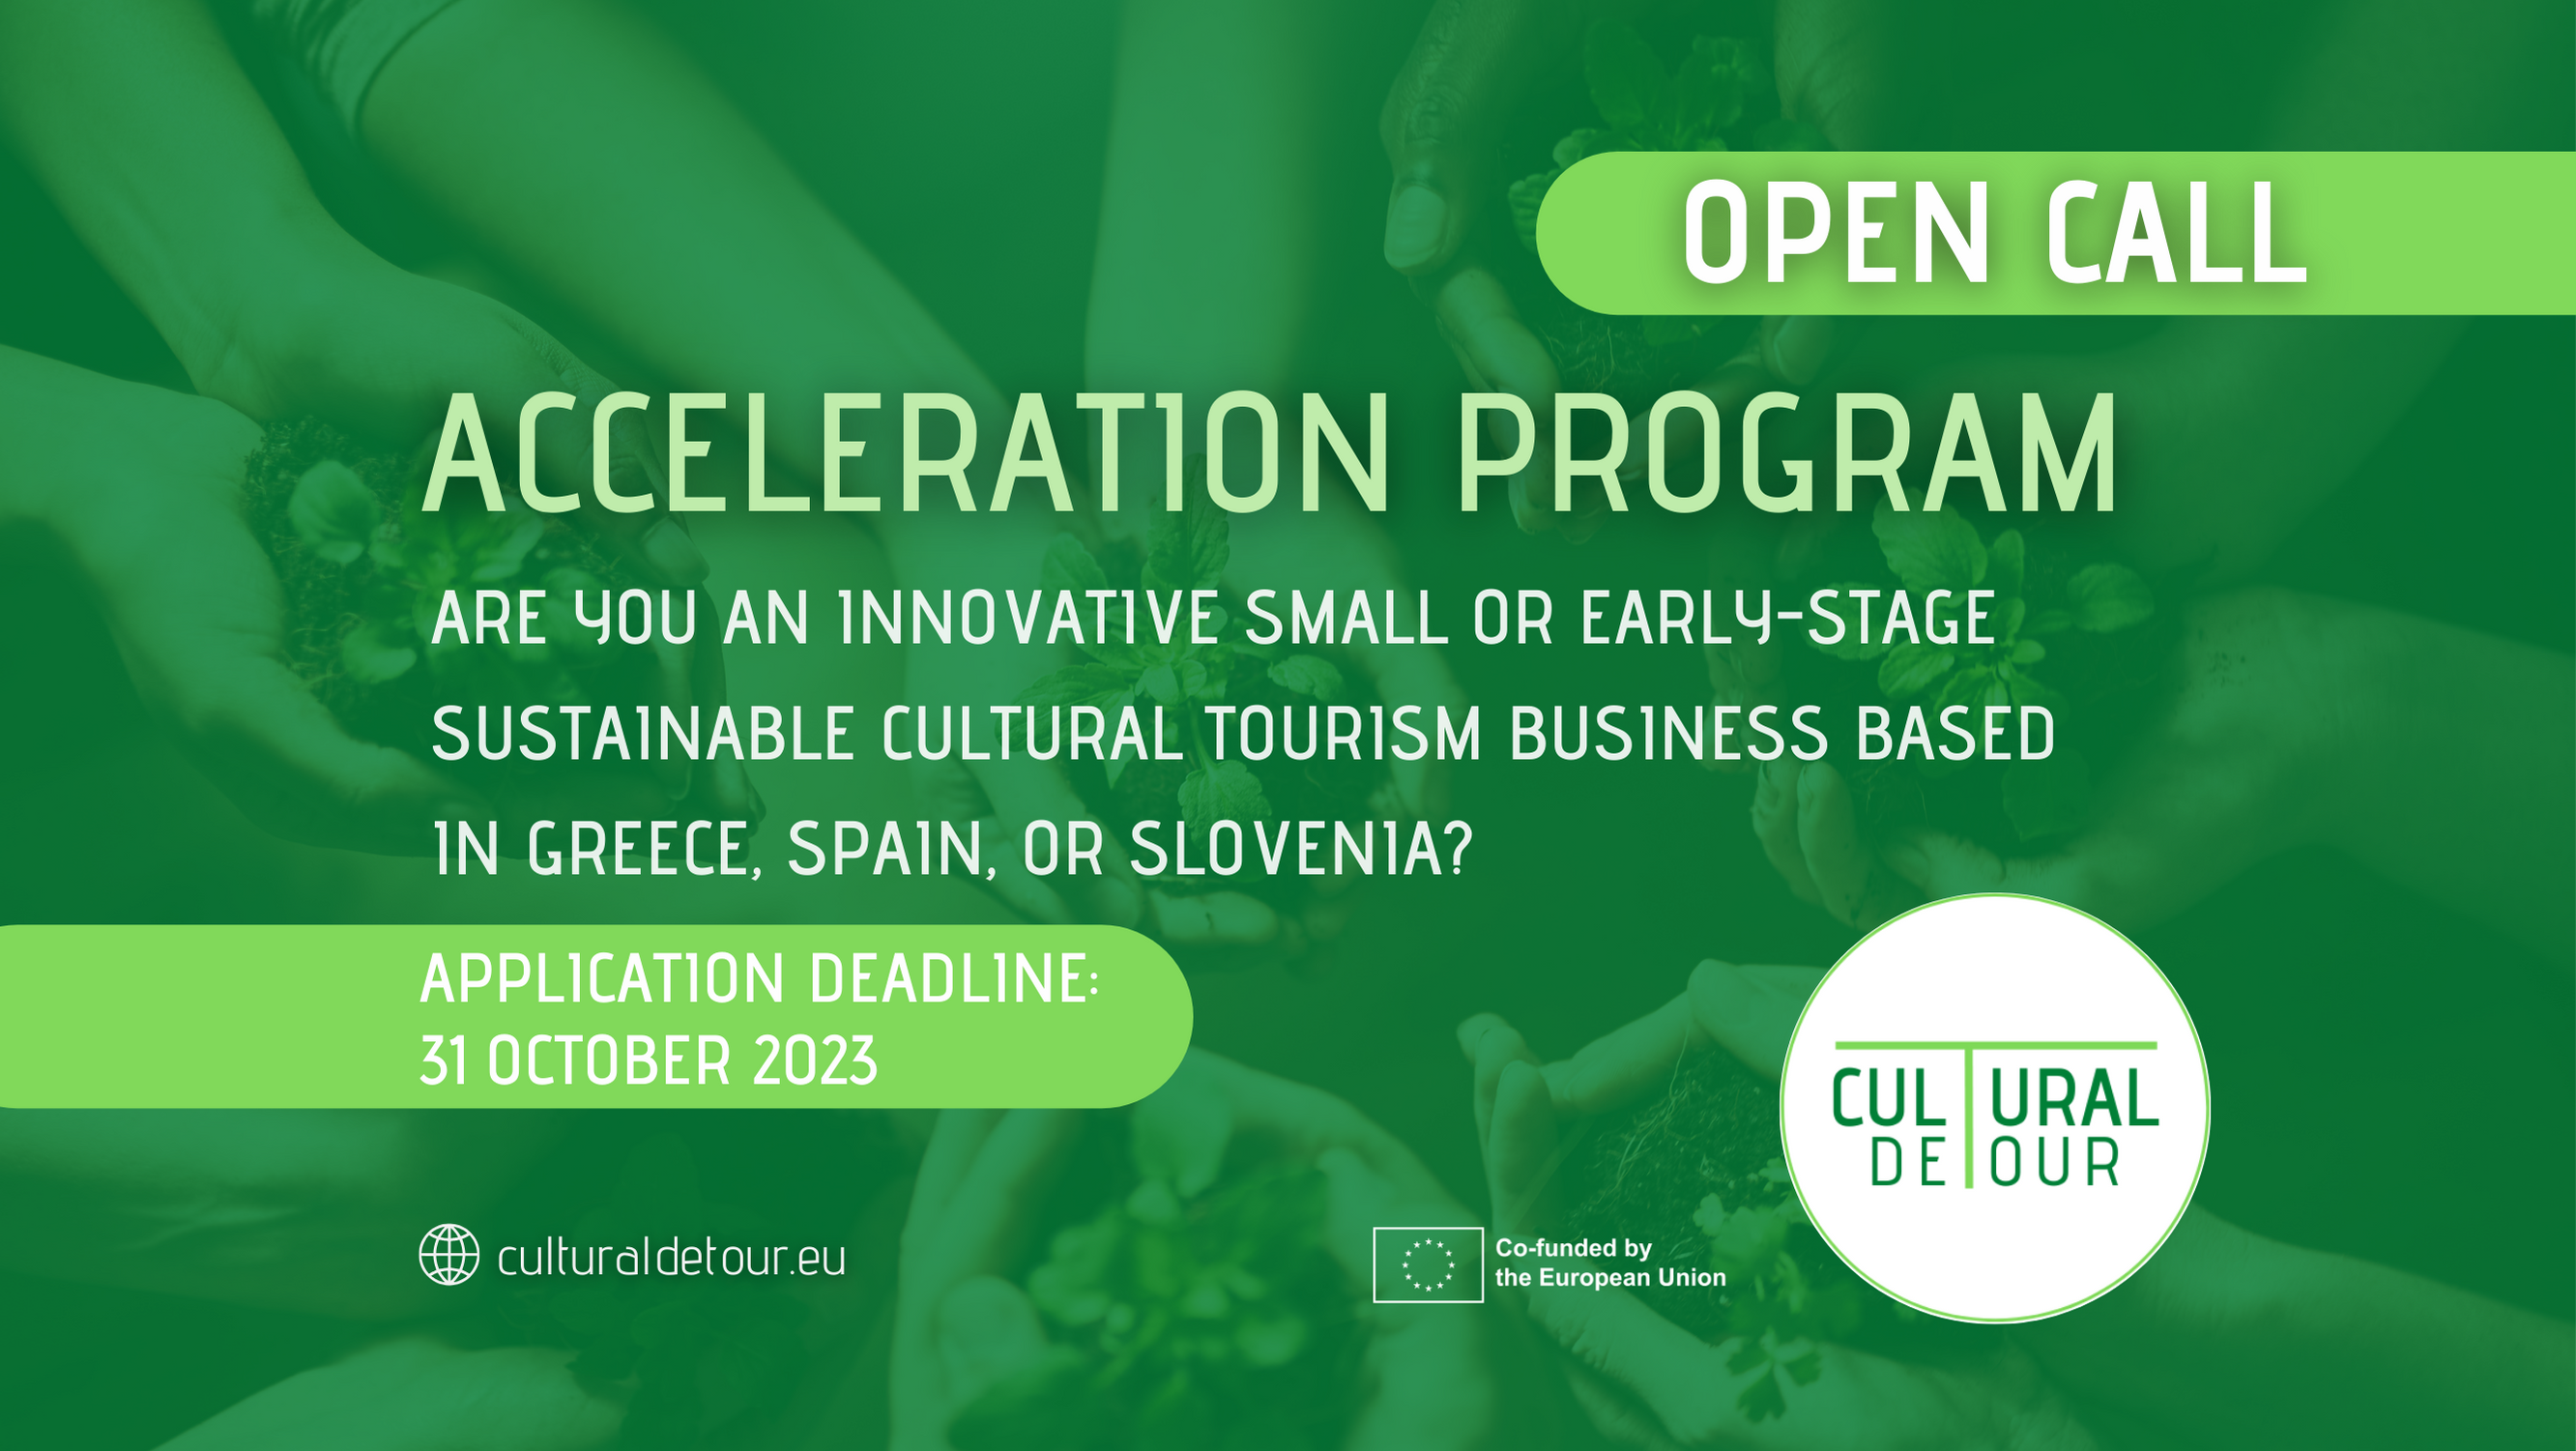 CulturalDeTour seeks 30 startups to develop cultural tourism in Greece, Slovenia and Spain